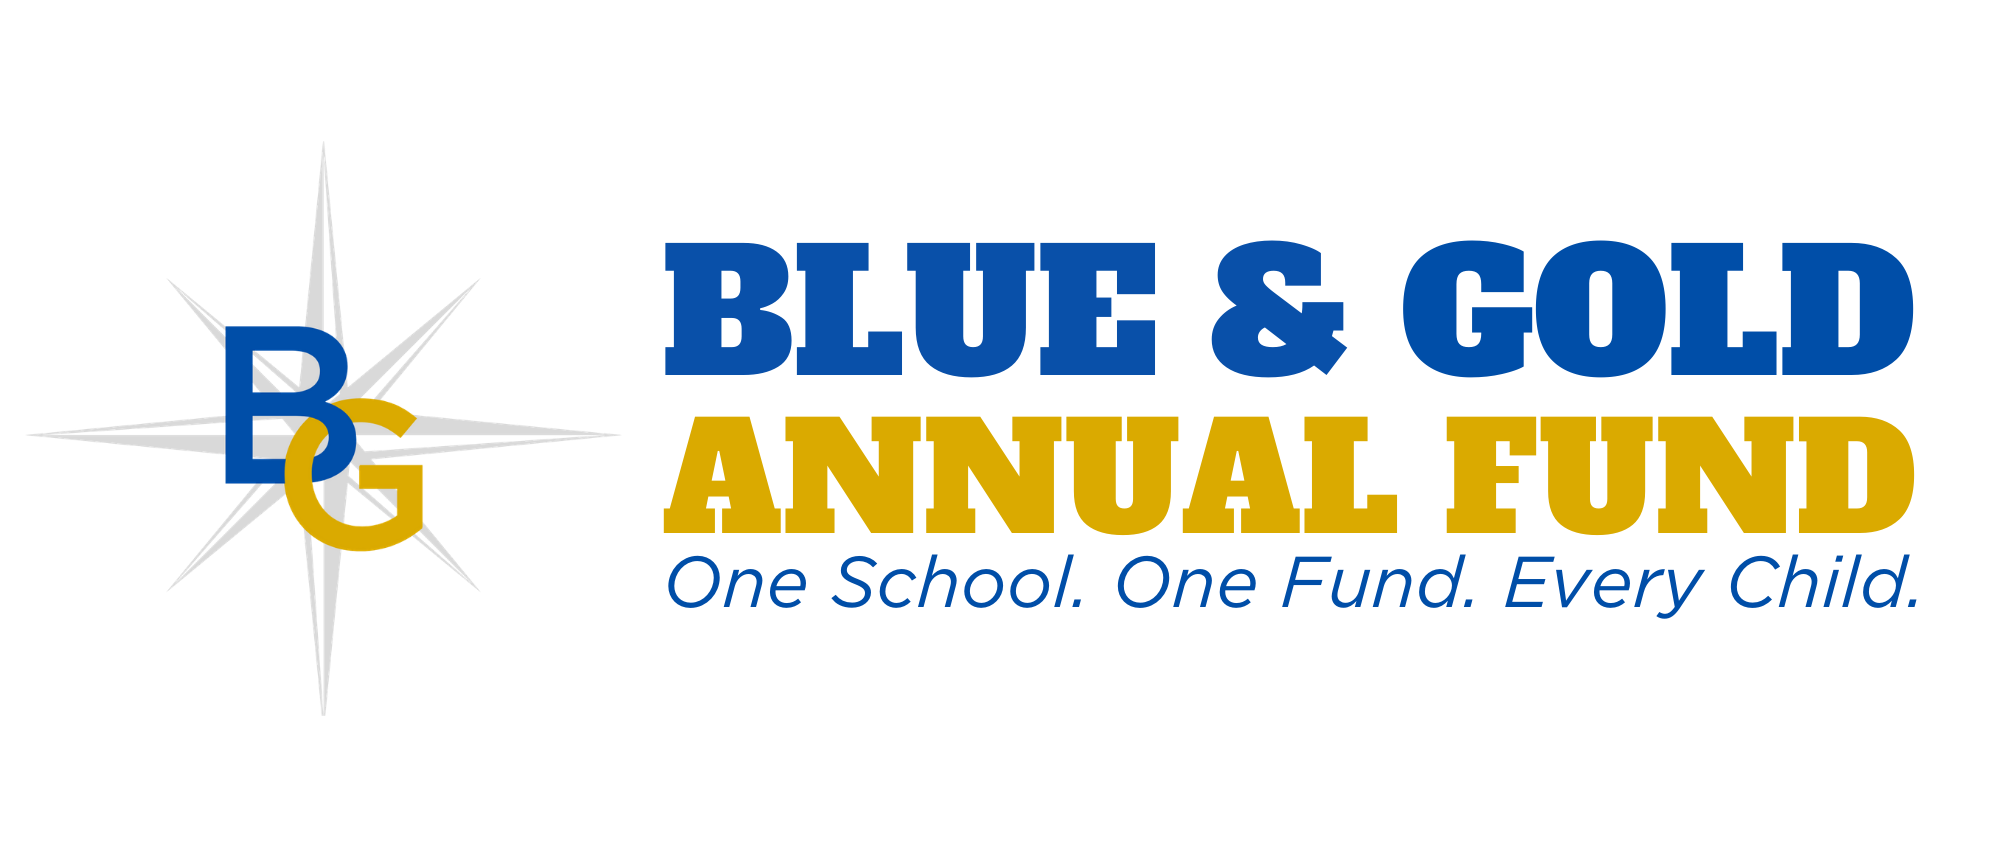 Blue and Gold Annual Fund (1) | St. John Paul II School